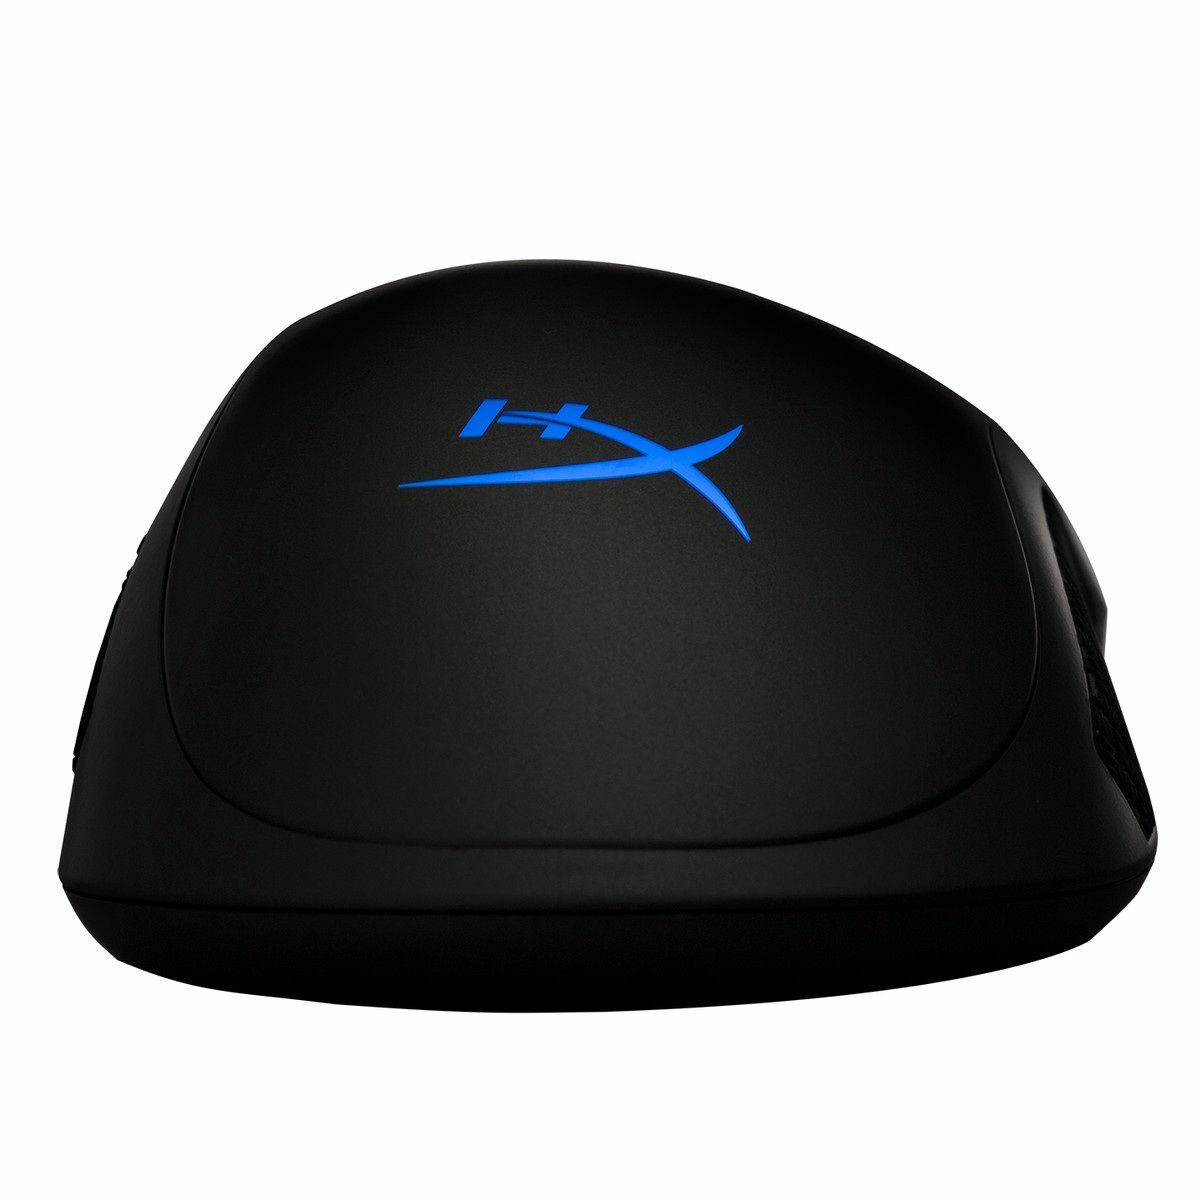 HyperX Pulsefire PRO Gaming Mouse / Black